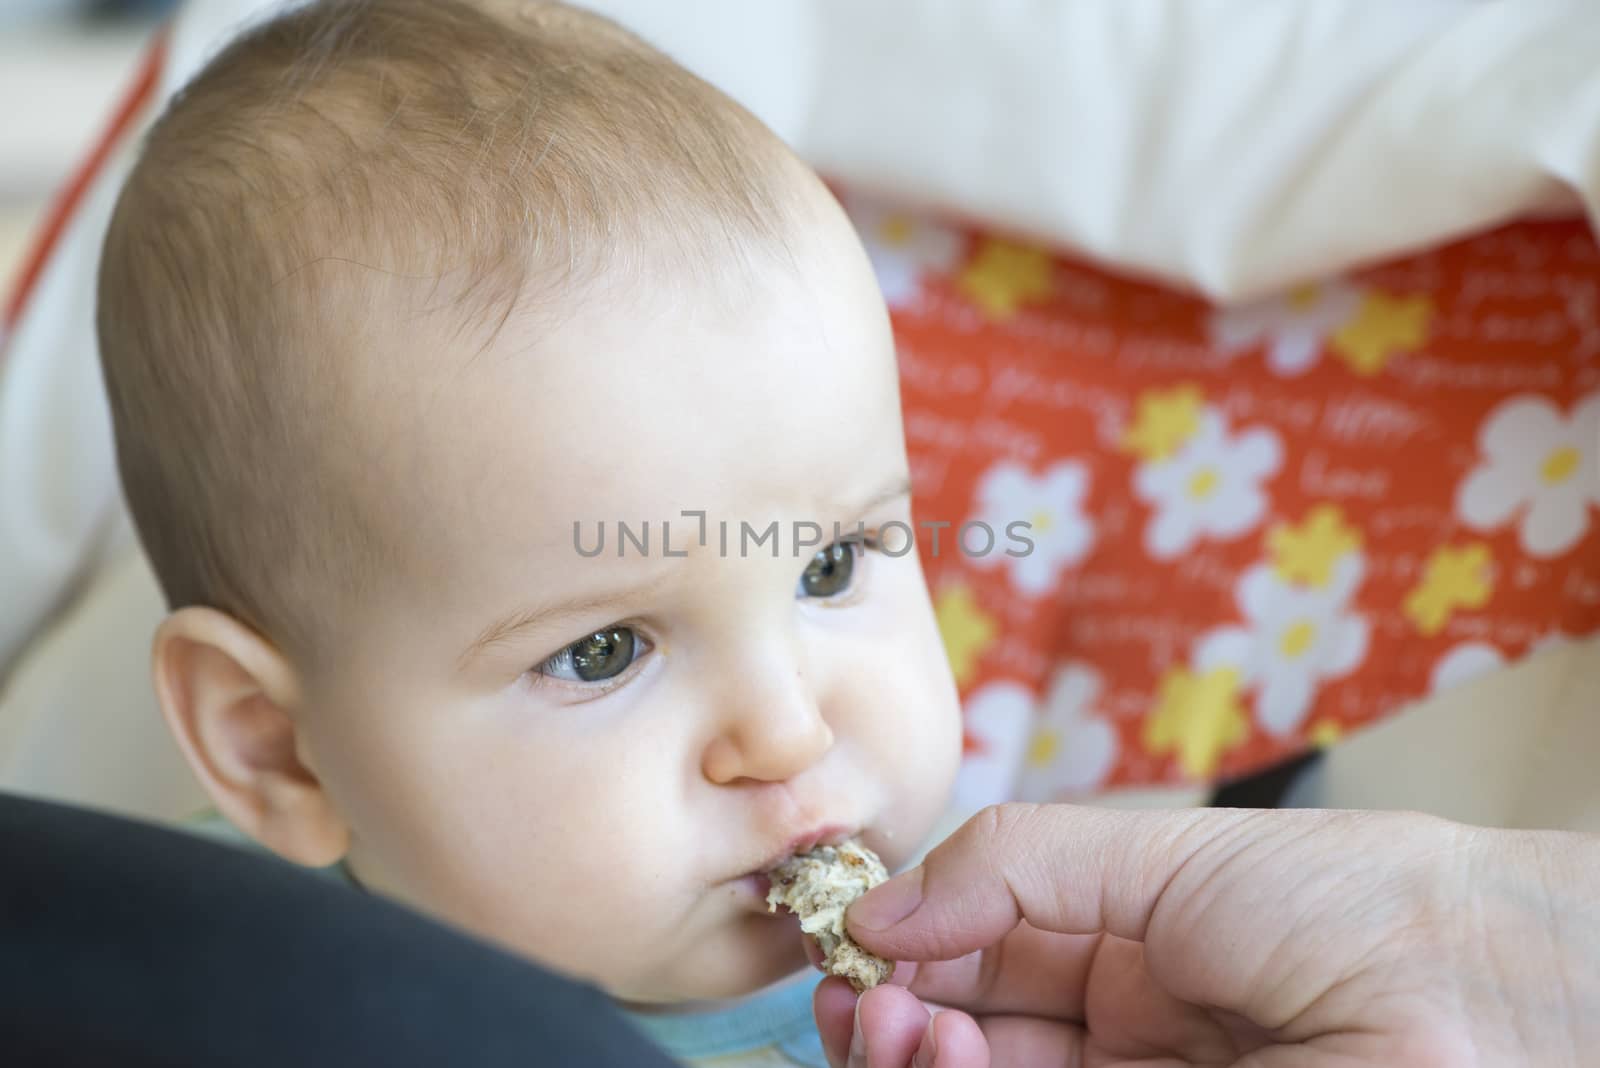 Baby eats alone. by deyan_georgiev